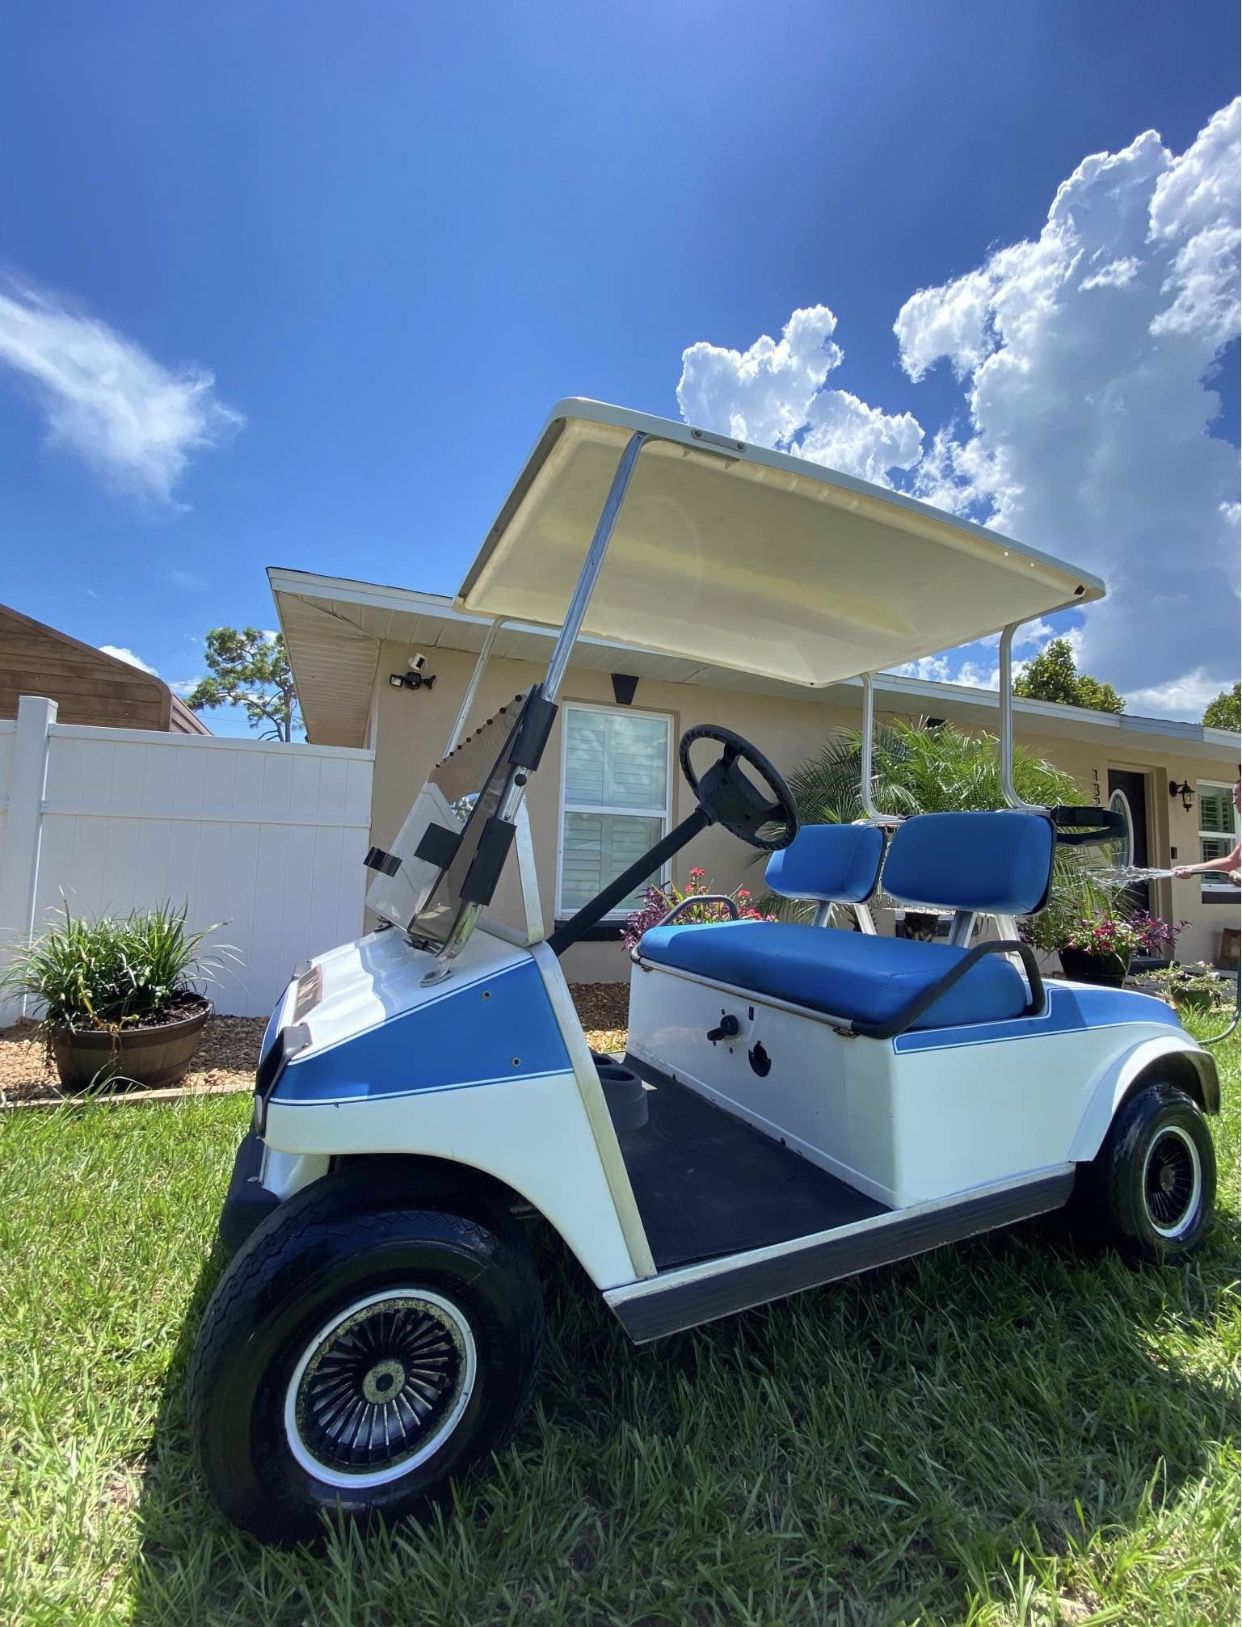 Club Car DS electric golf cart